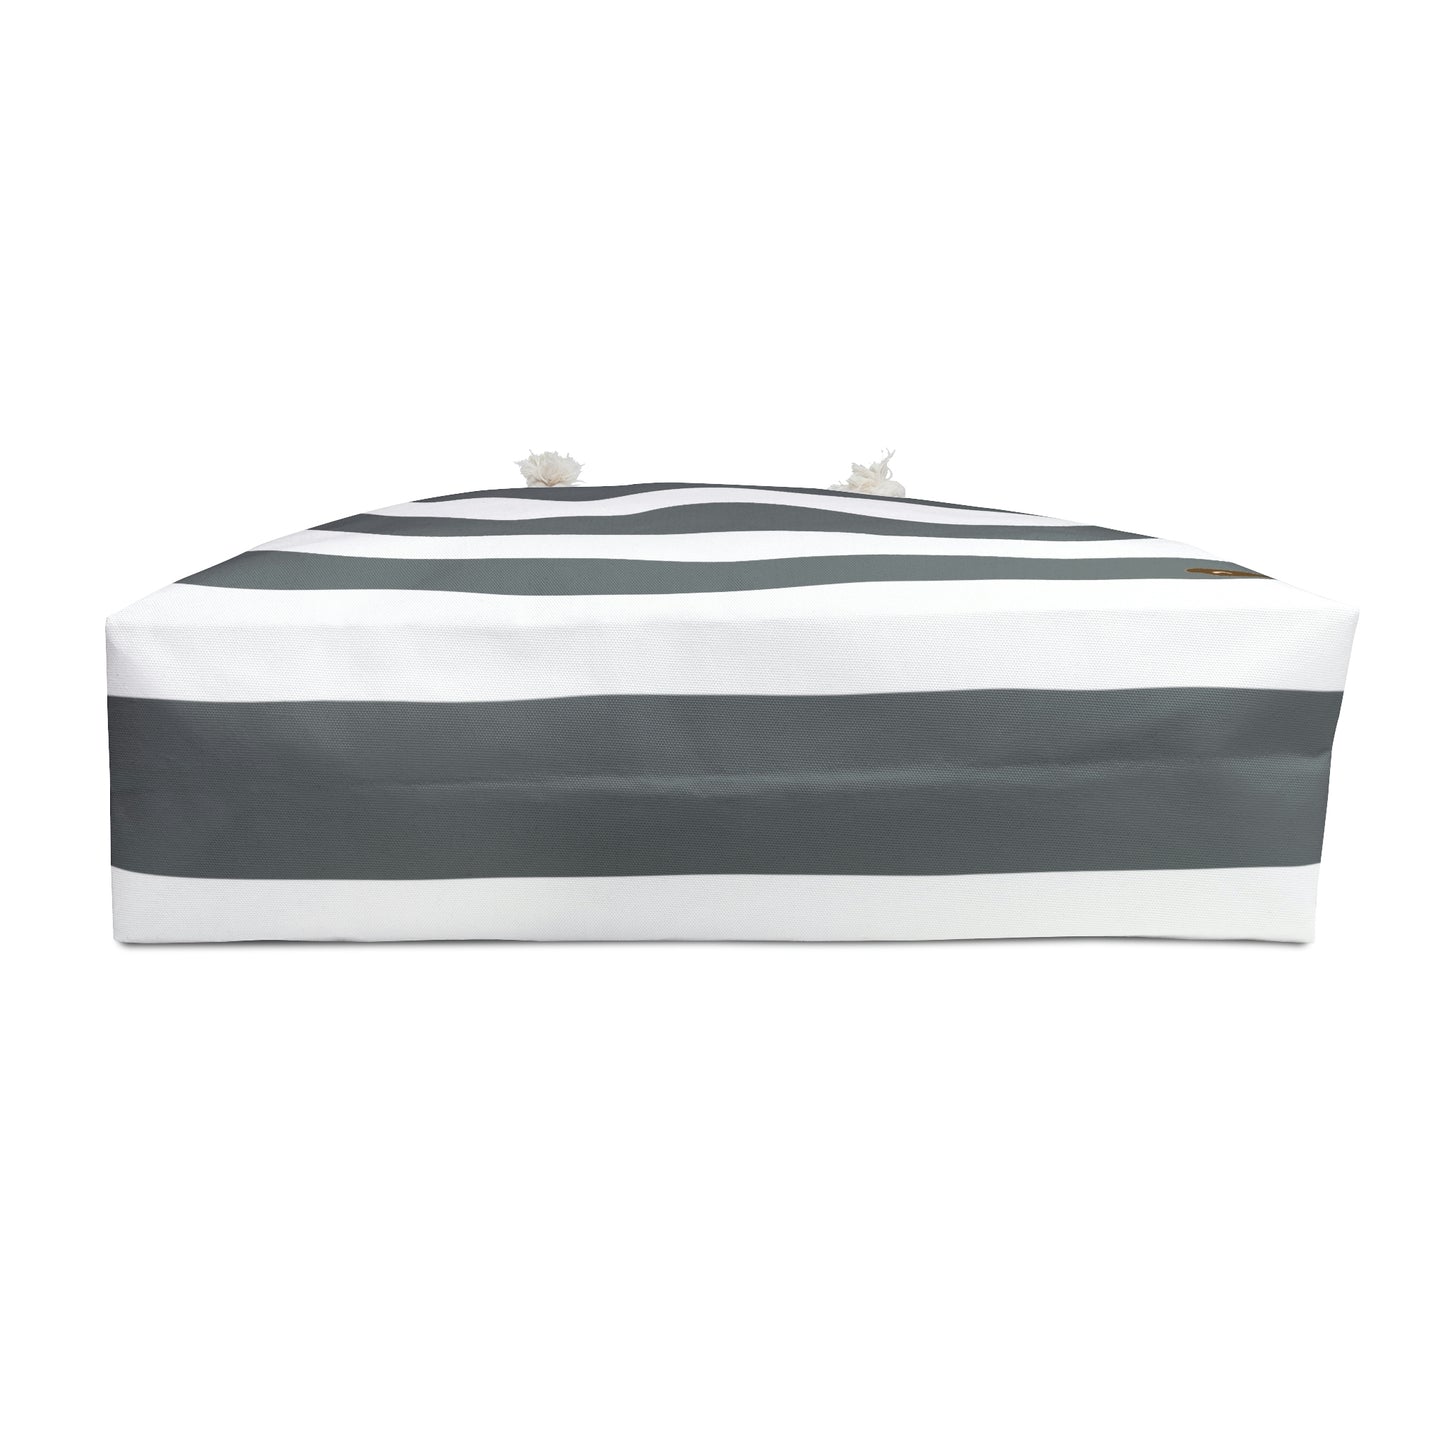 Weekender Tote Bag - Charcoal Gray/White Stripes